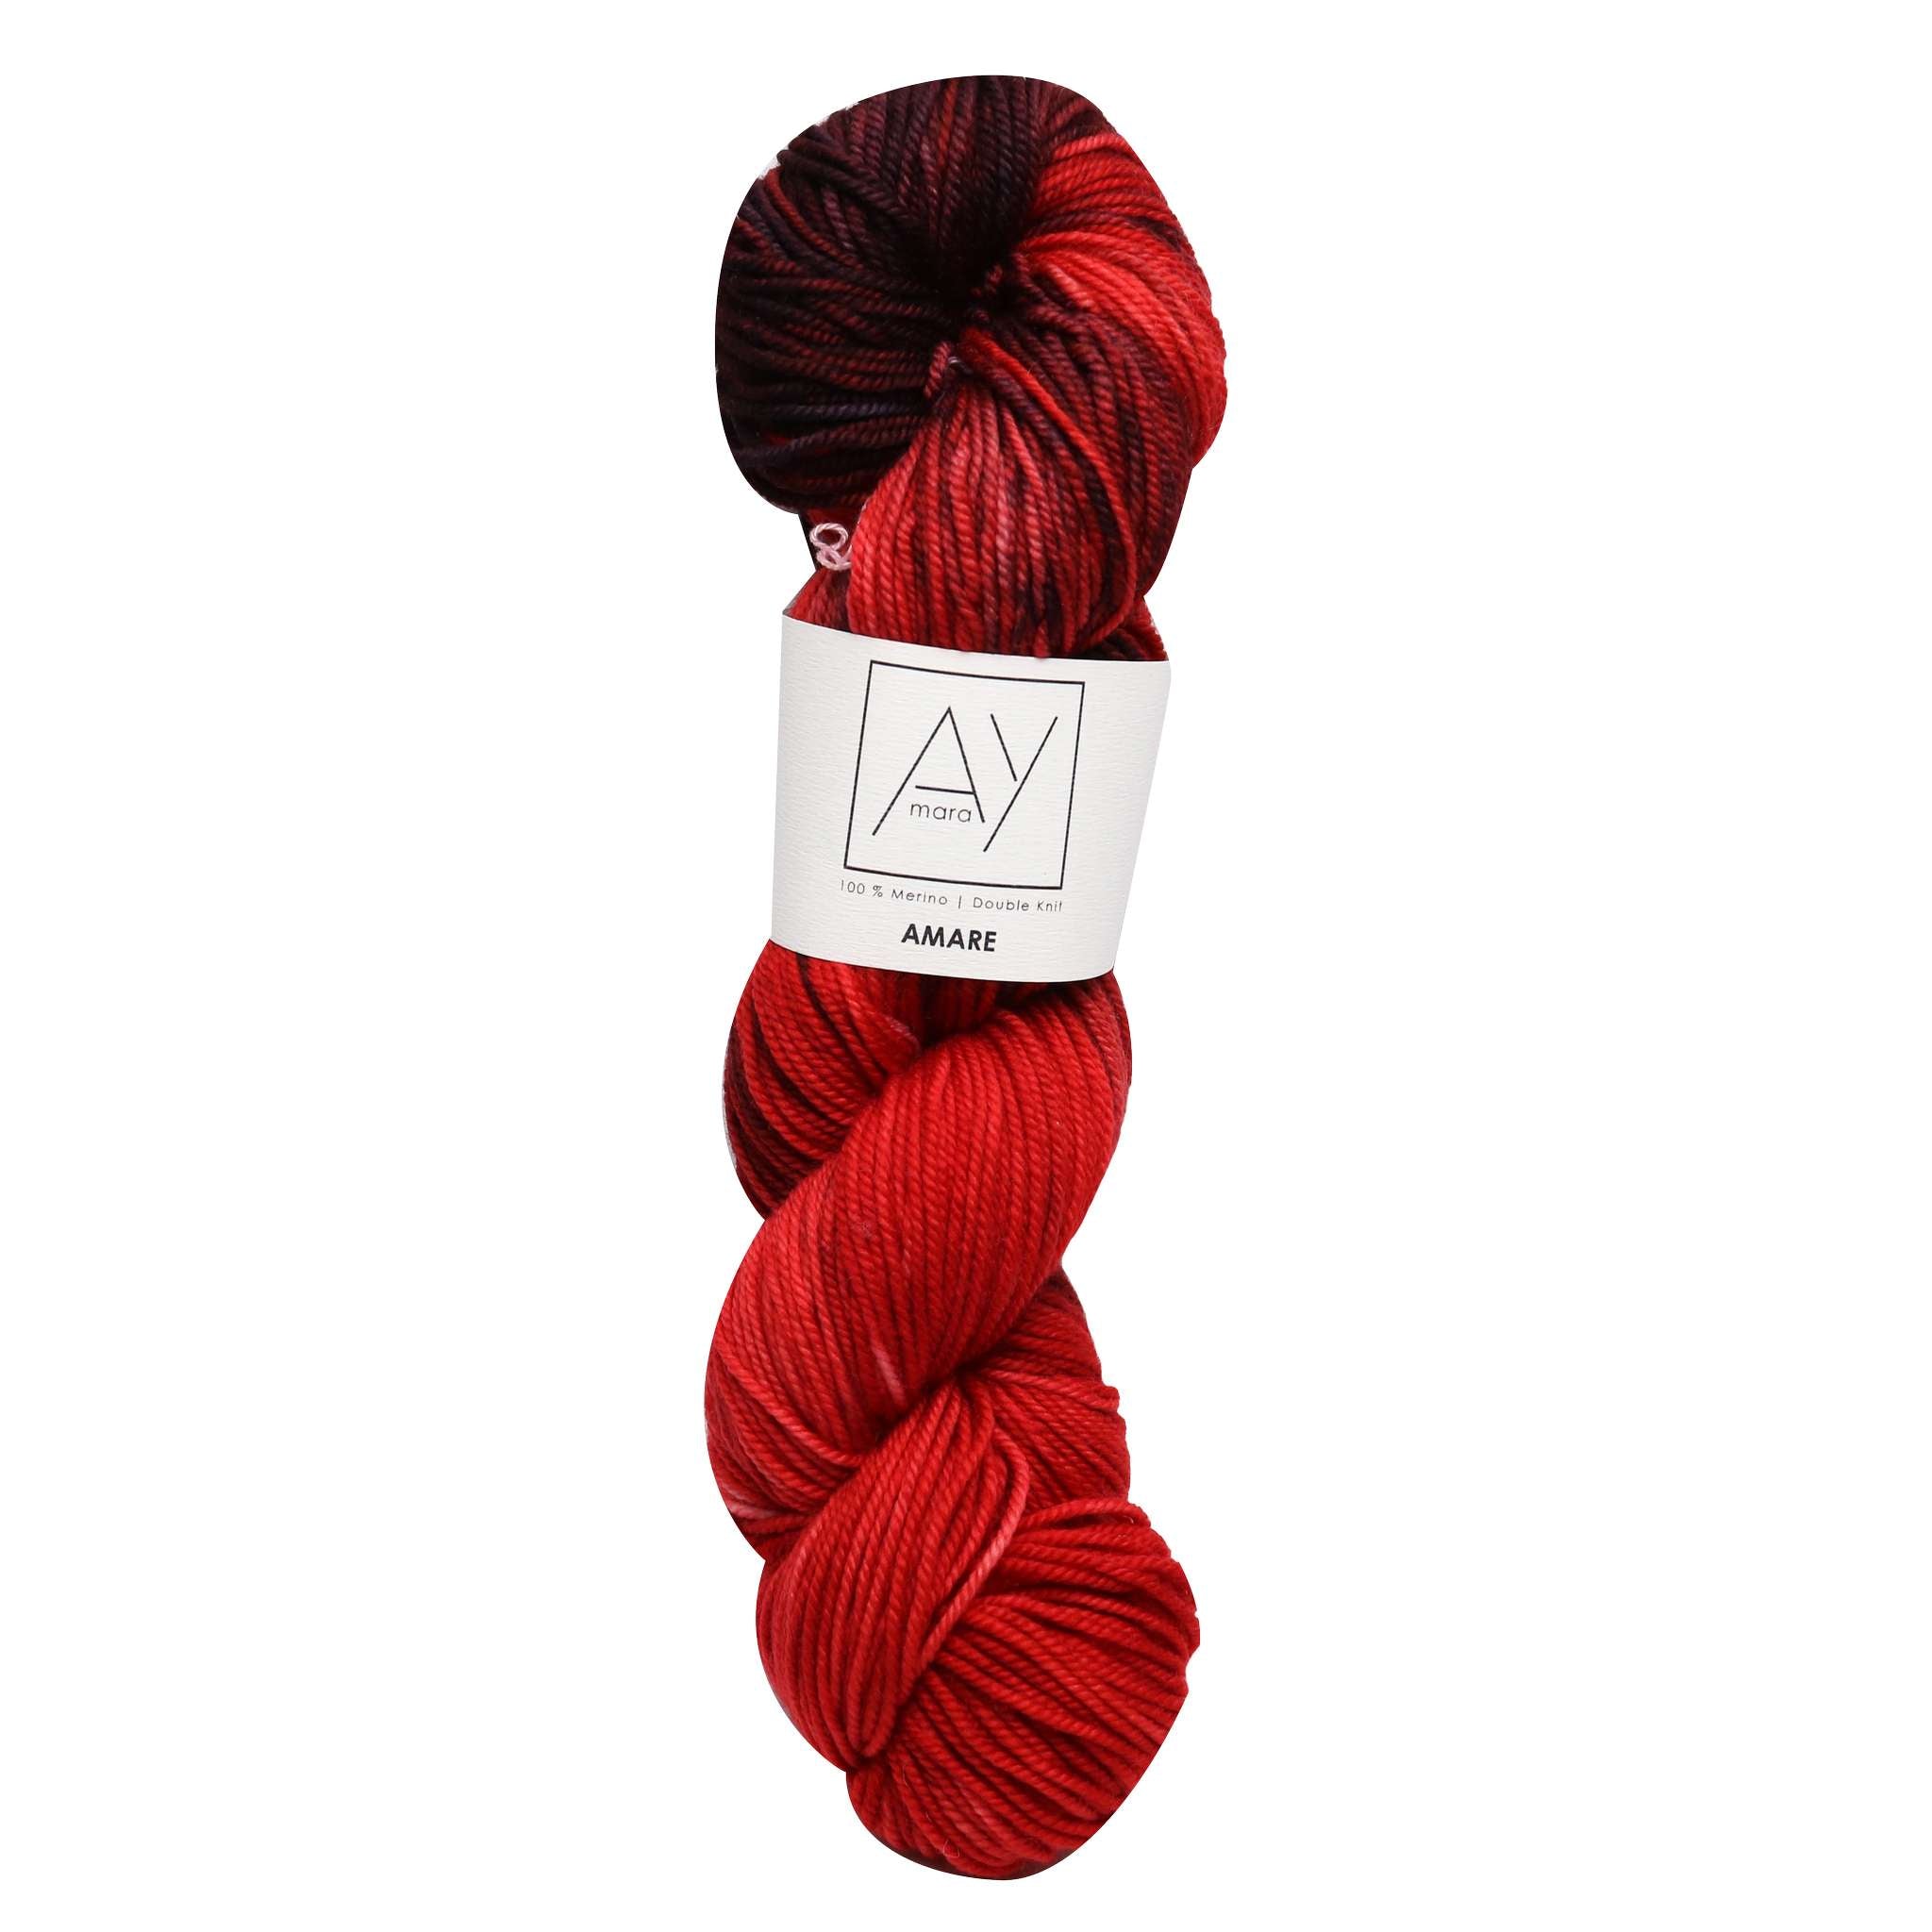 Yarn made from fine Merino